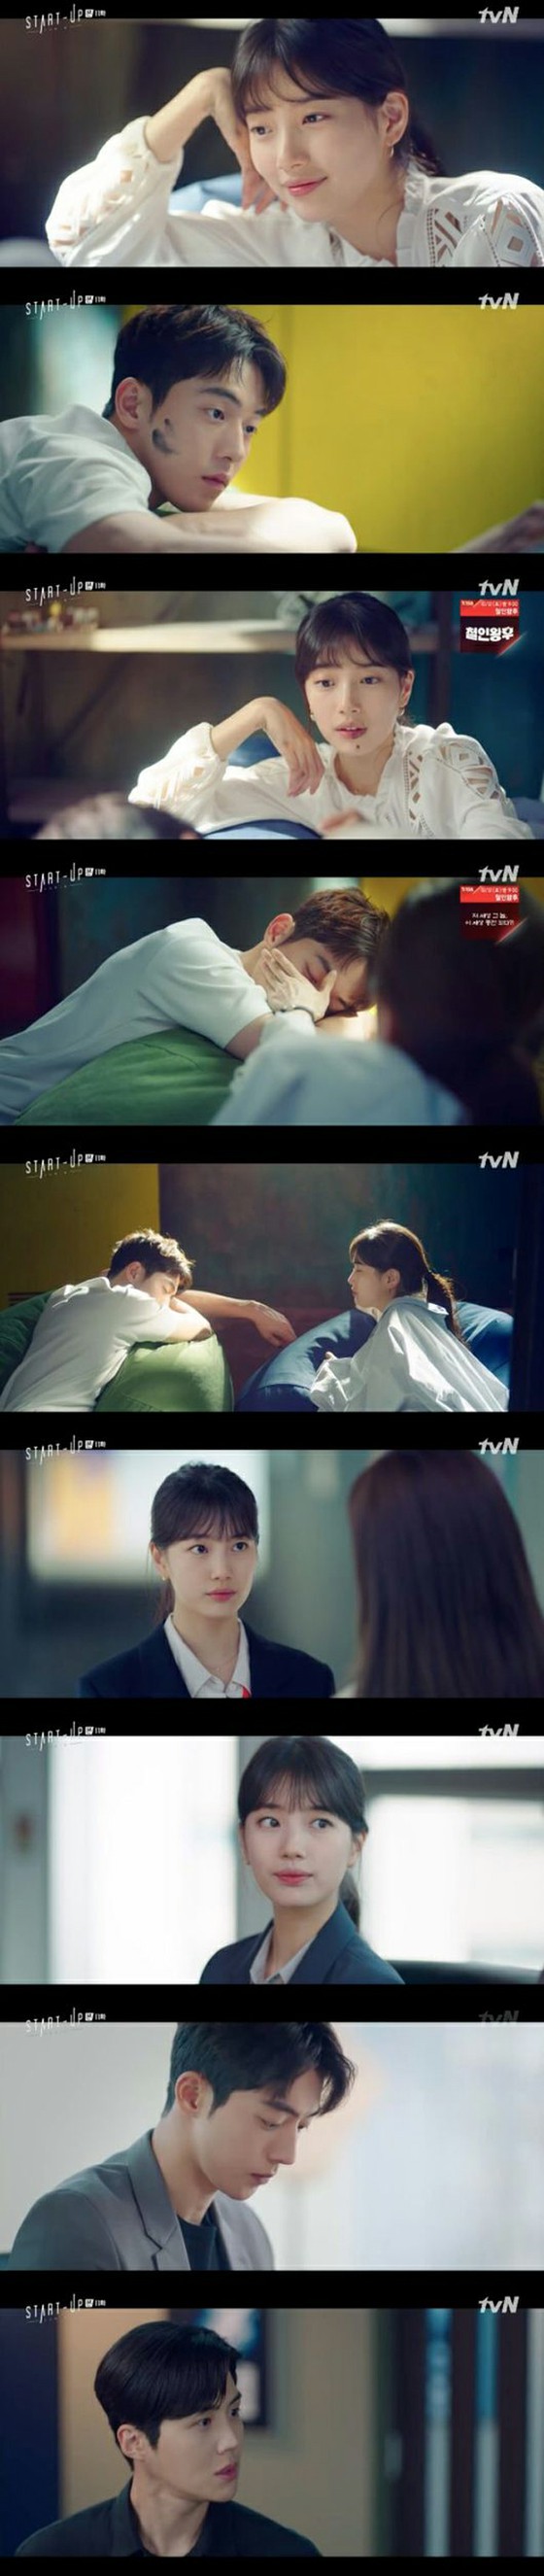 ≪Korean TV Series NOW≫ "Startup" EP11, Suzy's heart goes to Nam Ju Hyuk ... Cho Tae Gwan's tactics threaten